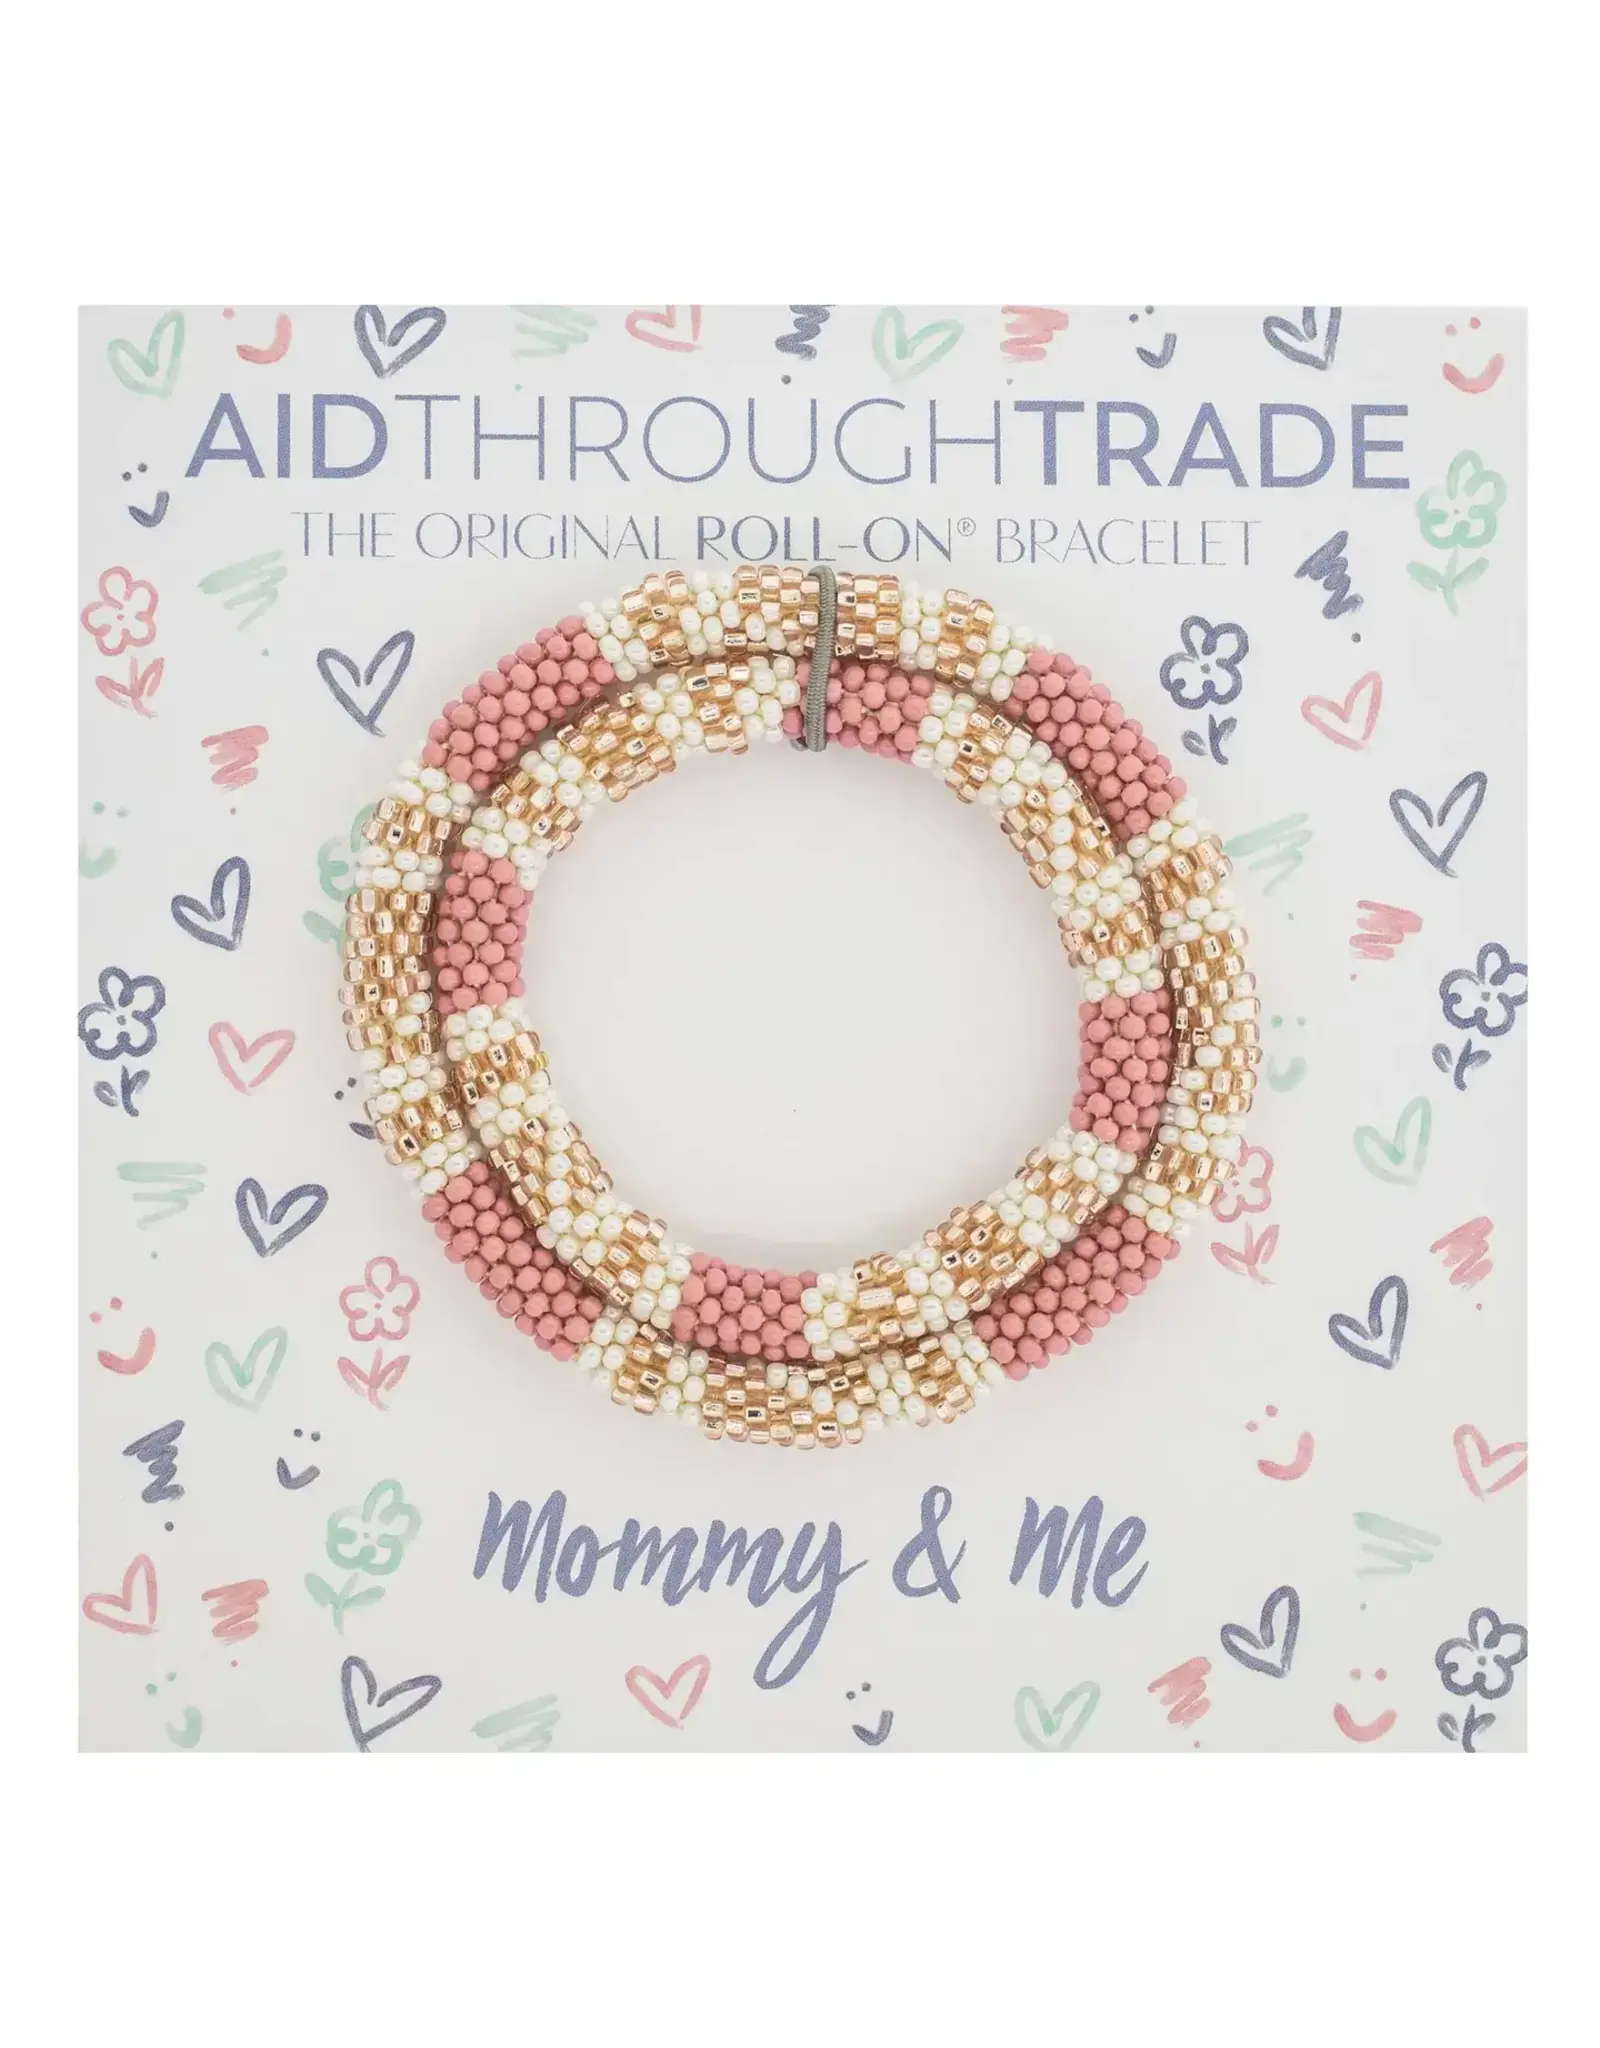 Aid Through Trade/Faire Mommy & Me Bracelets Desert Rose